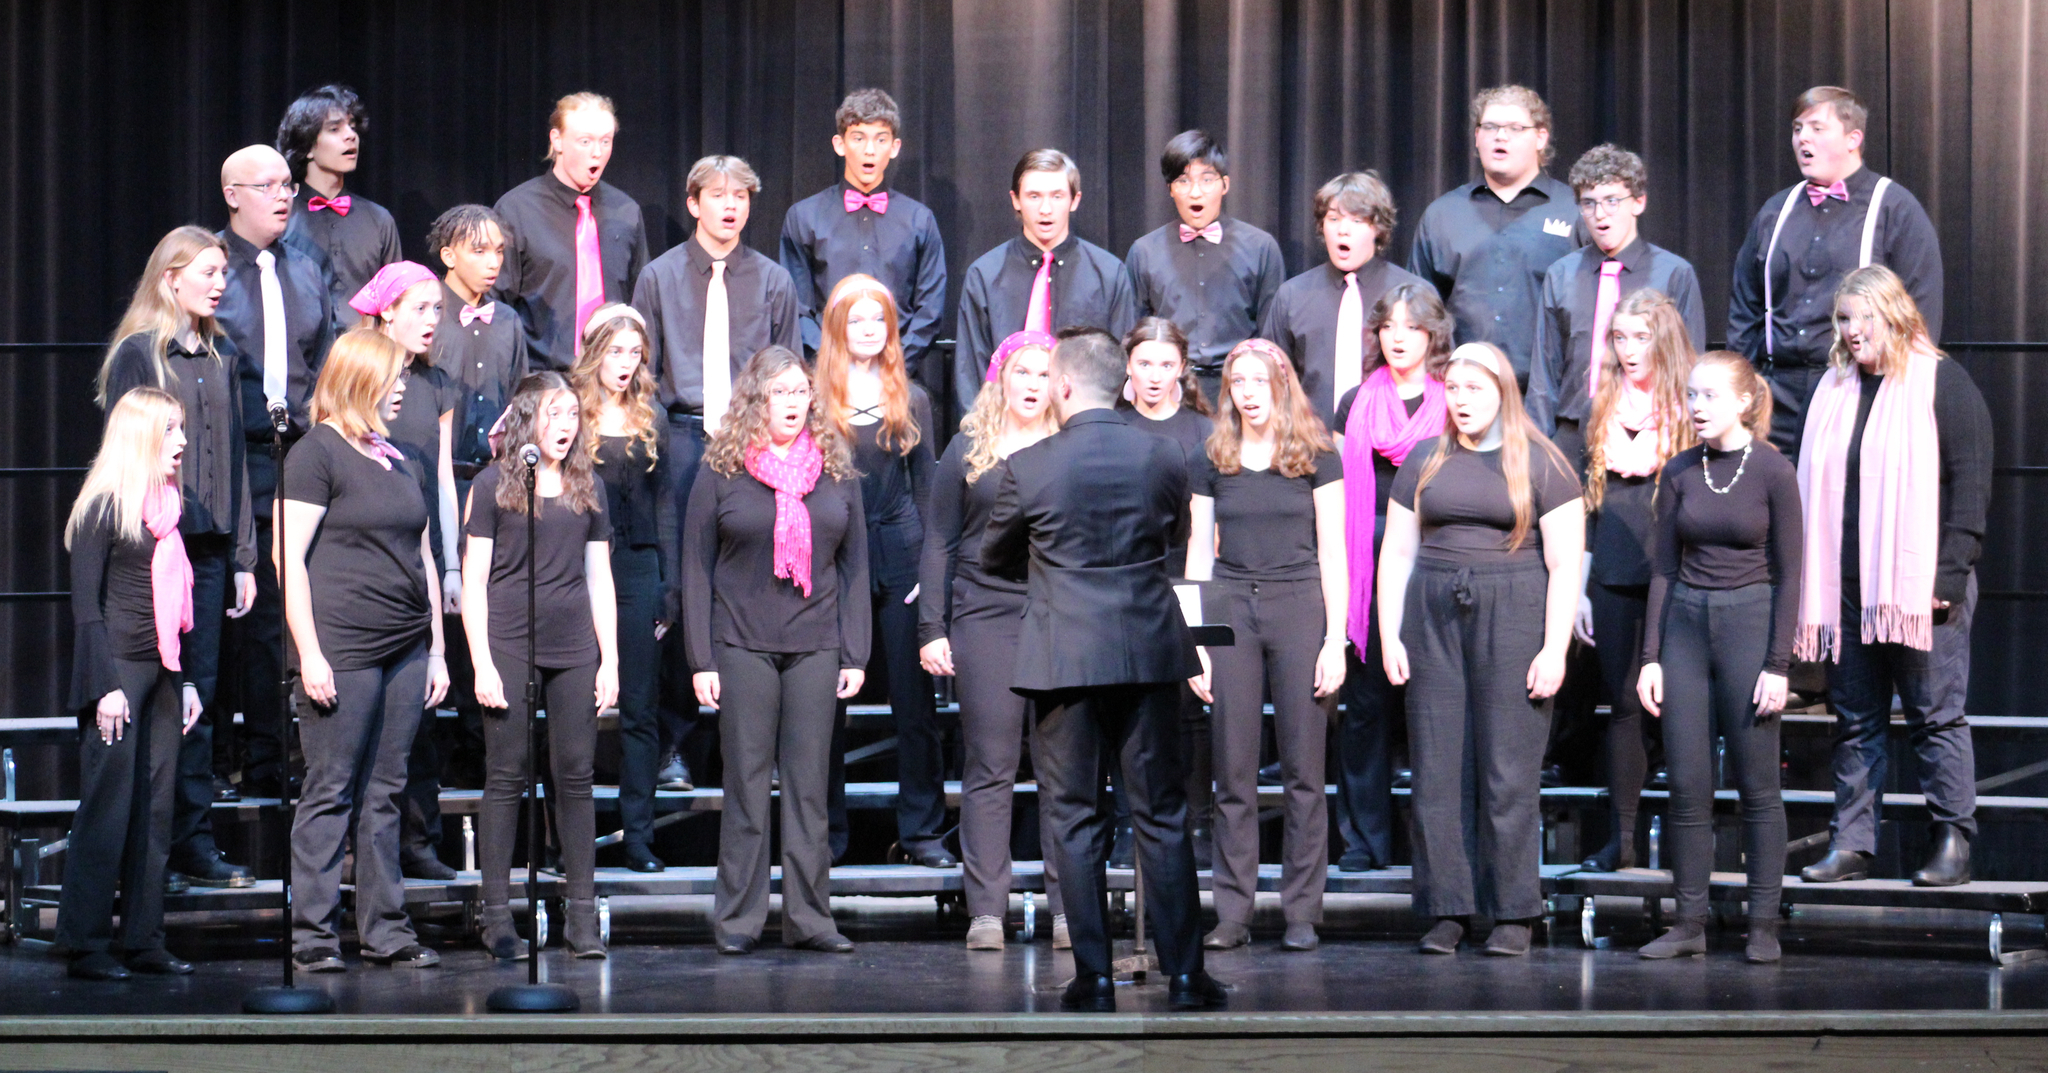 St. Johns High School Choir